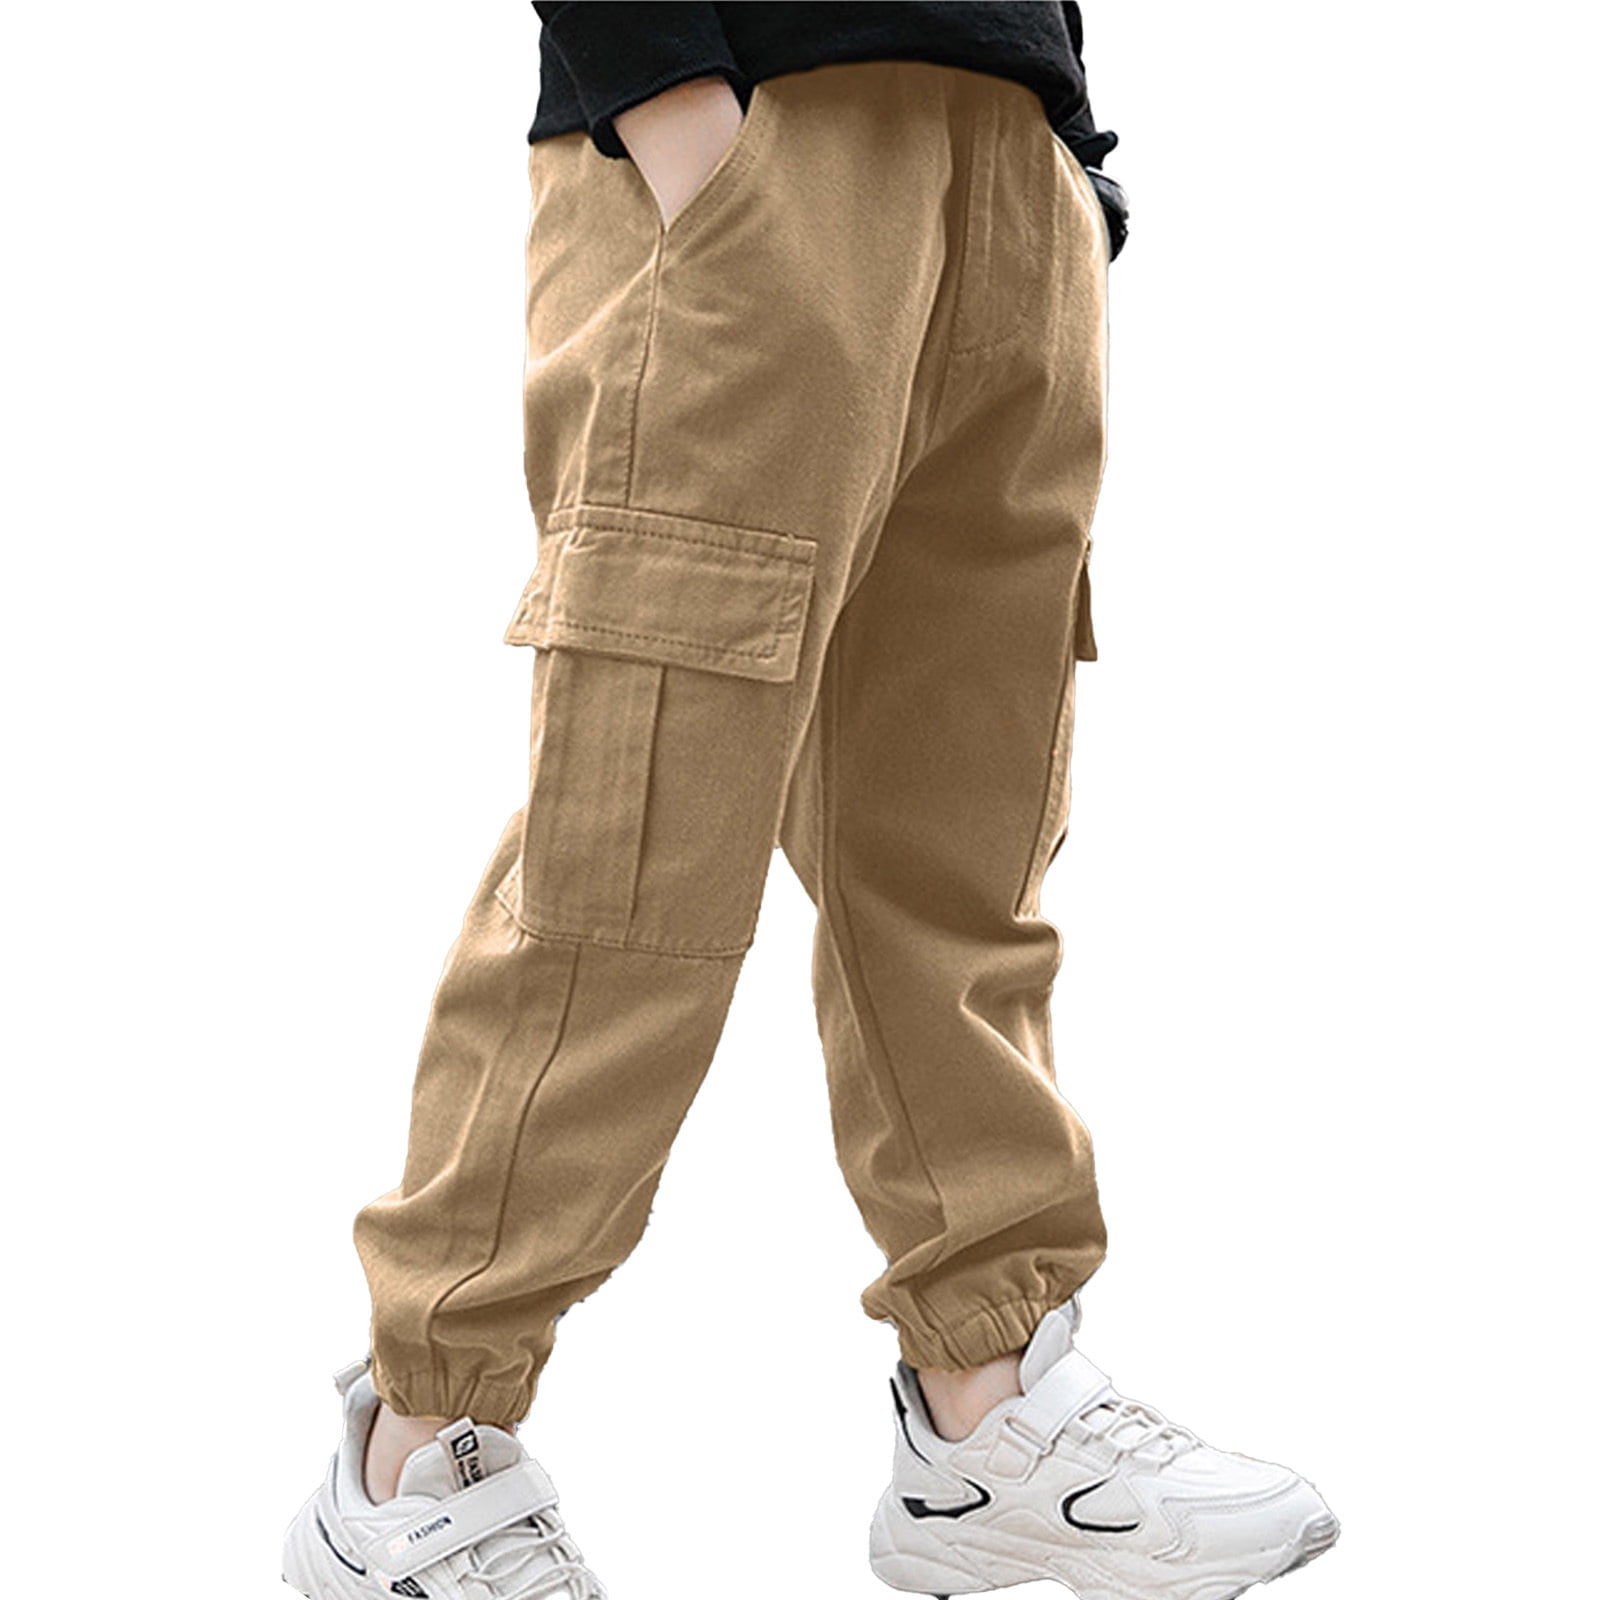 inhzoy Kids Boys Cargo Pants Hip Hop Street Dance Pants Trousers